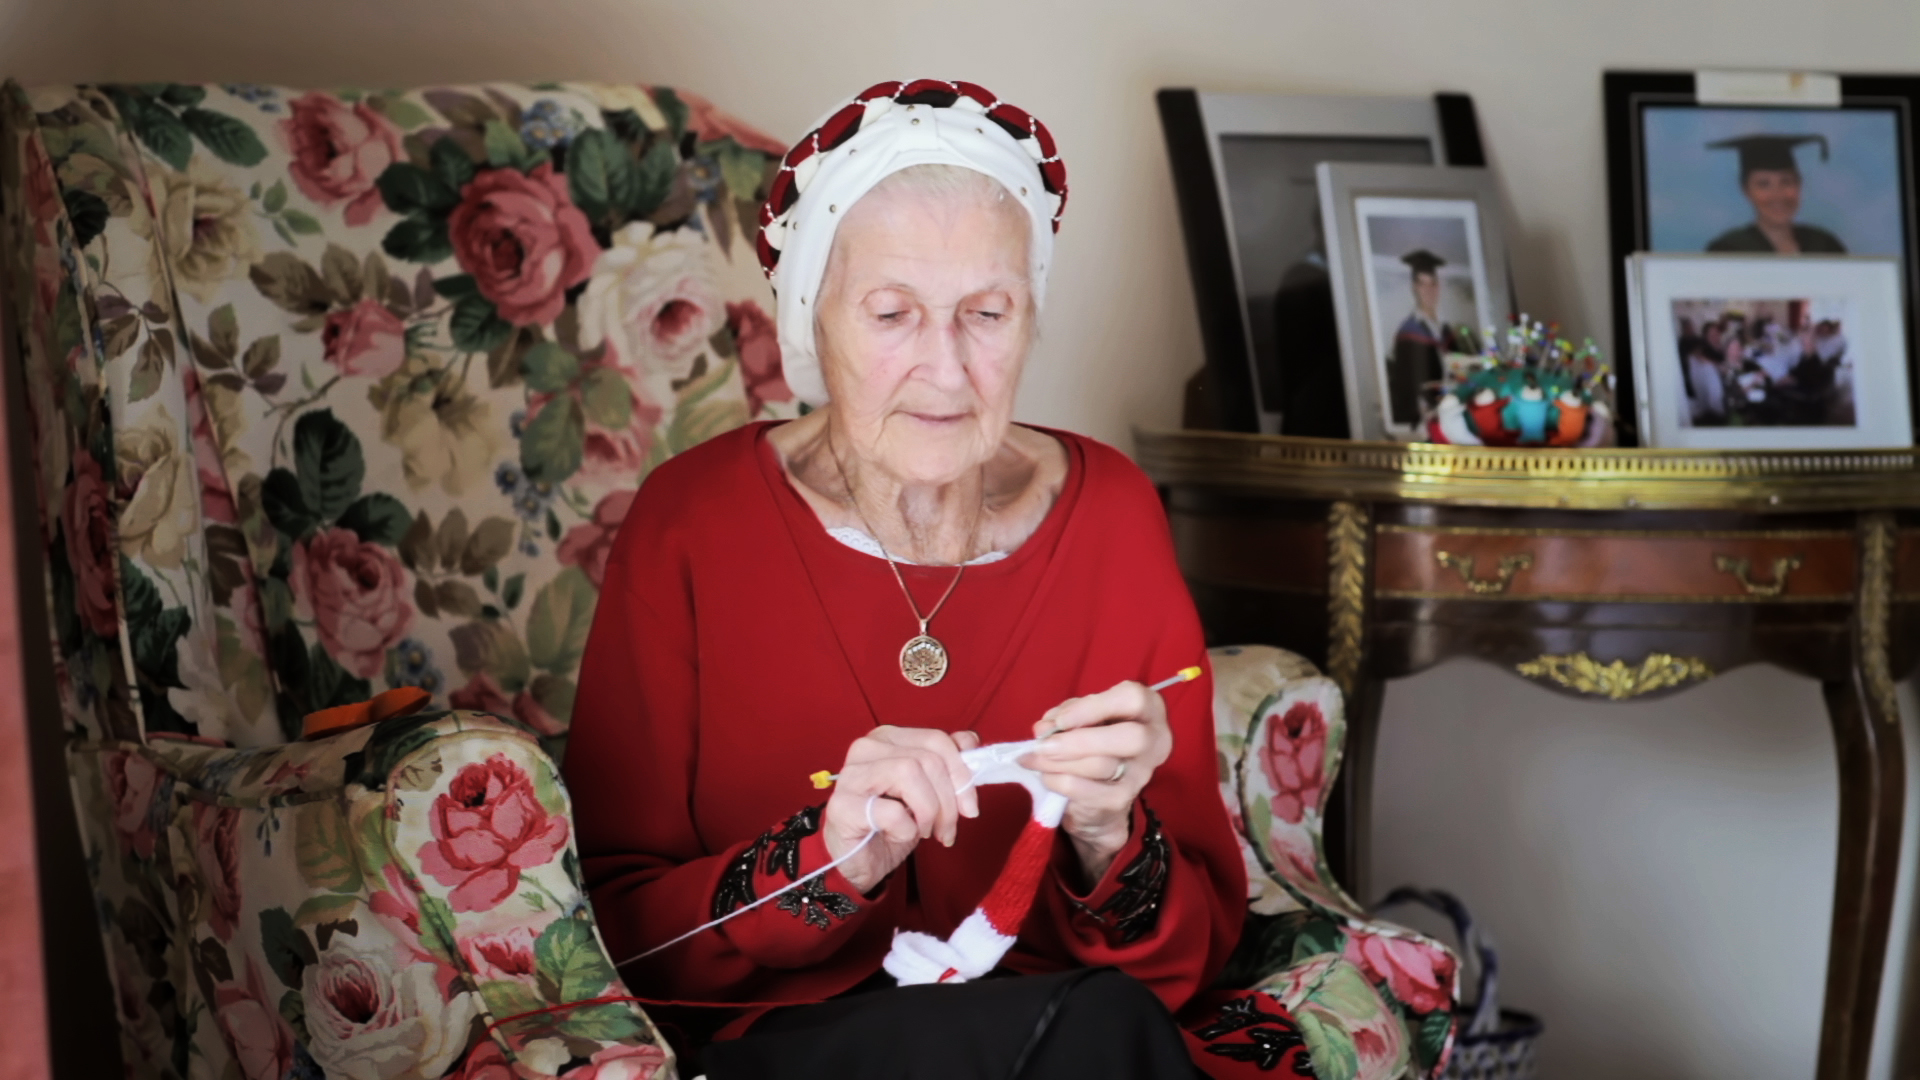 Fay knitting red jumper